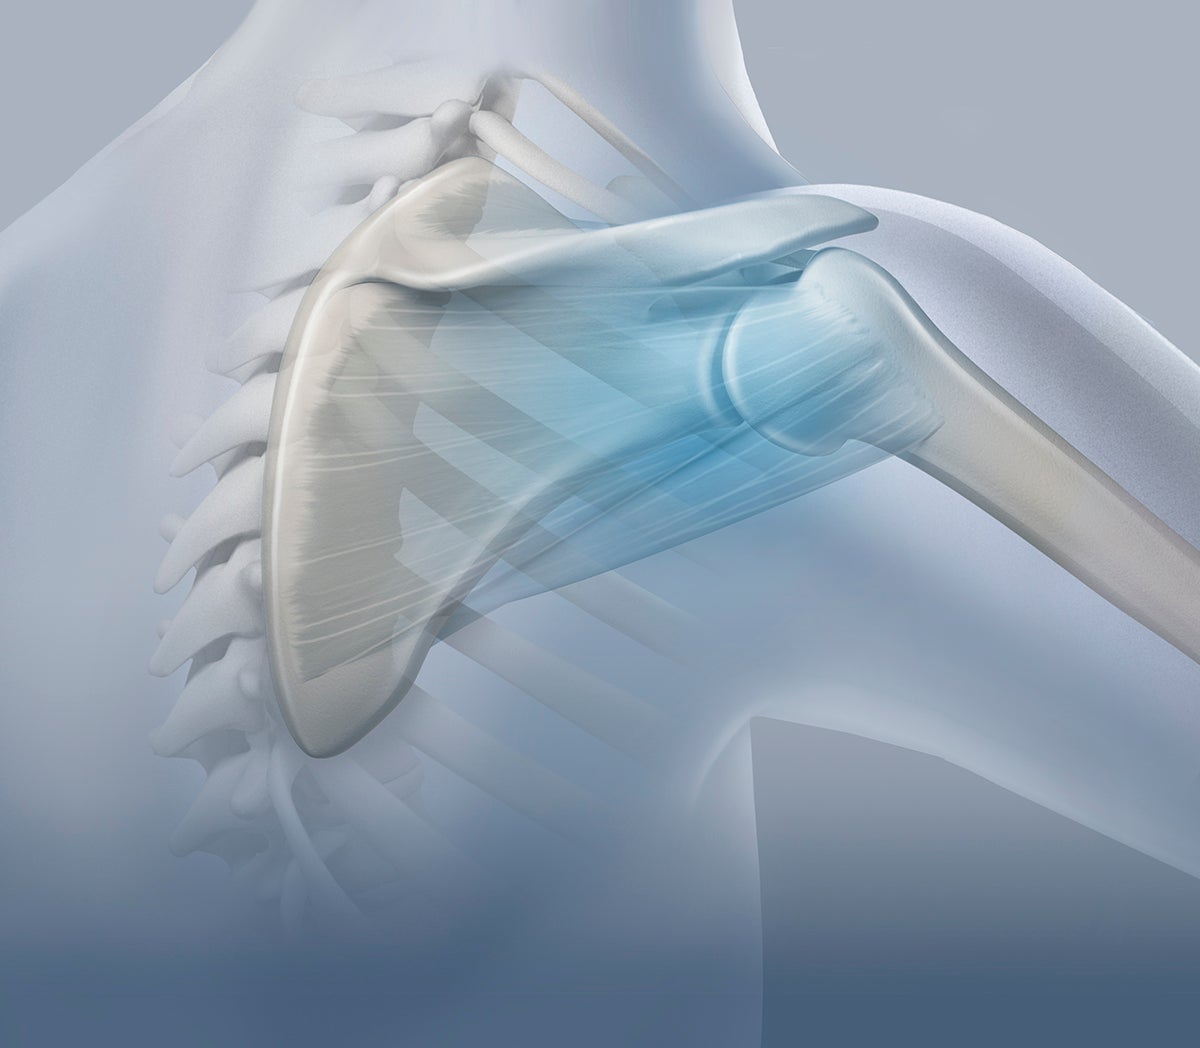 bones of the shoulder joint